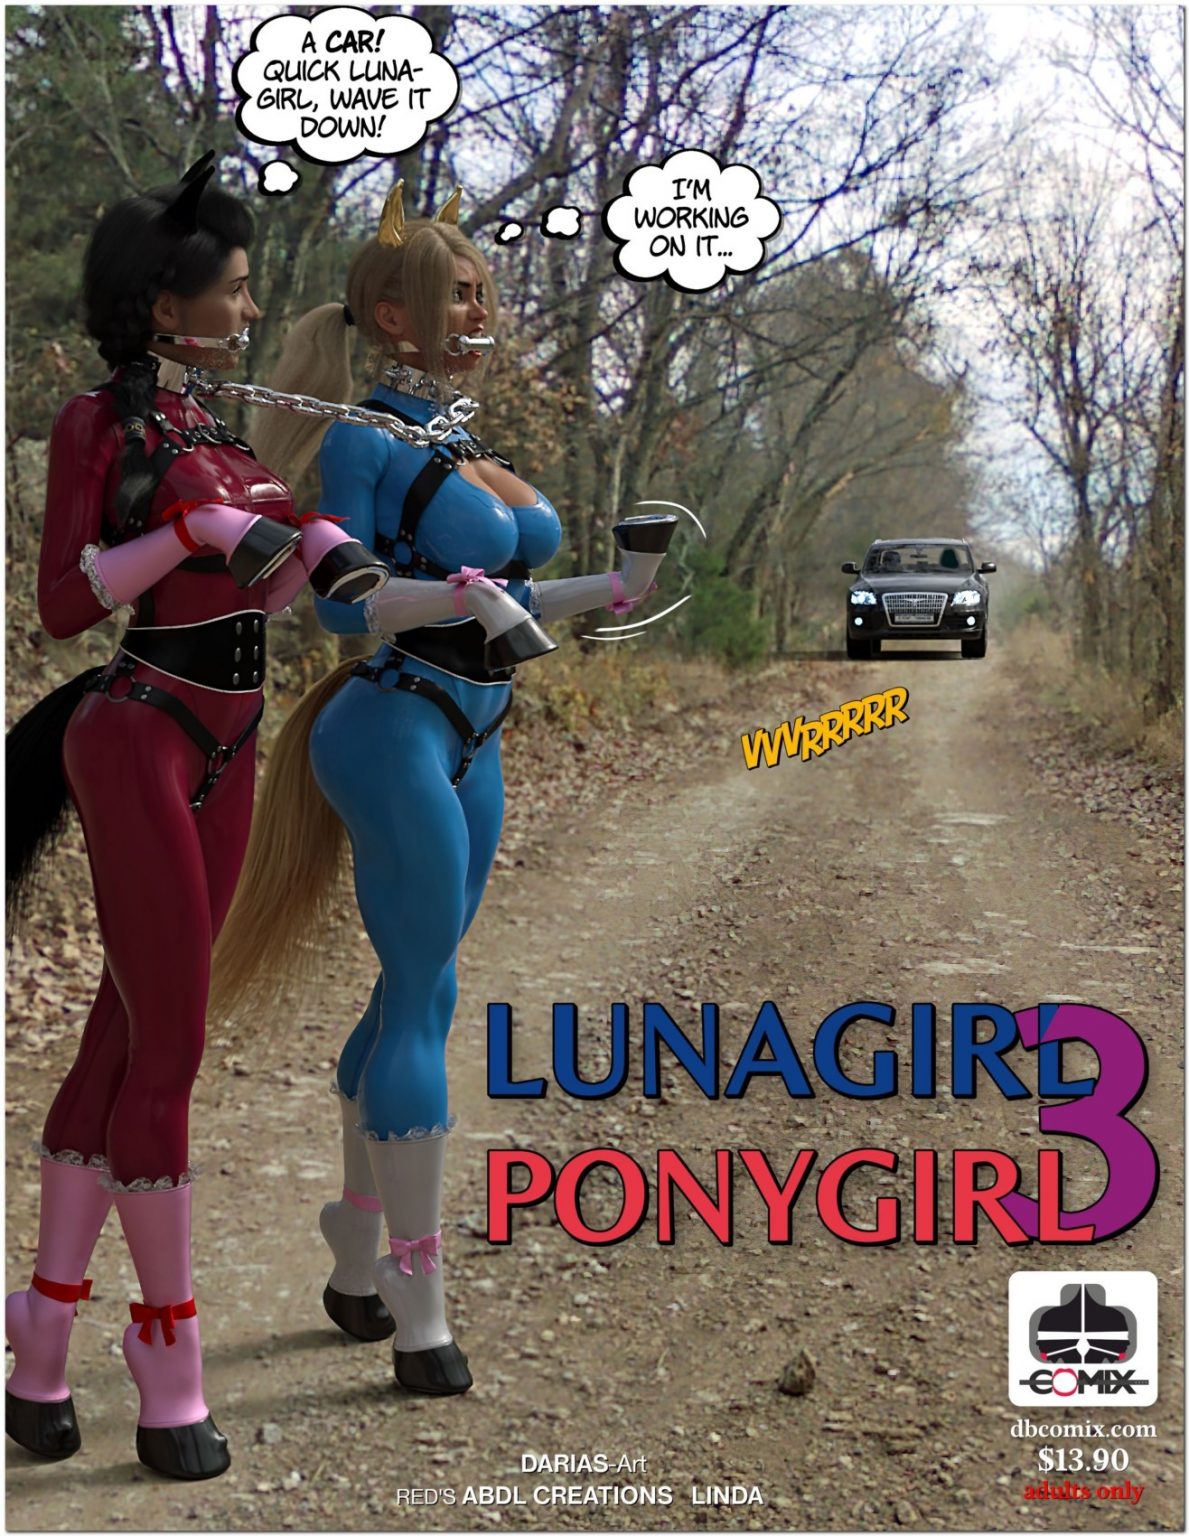 Lunagirl ponygirl